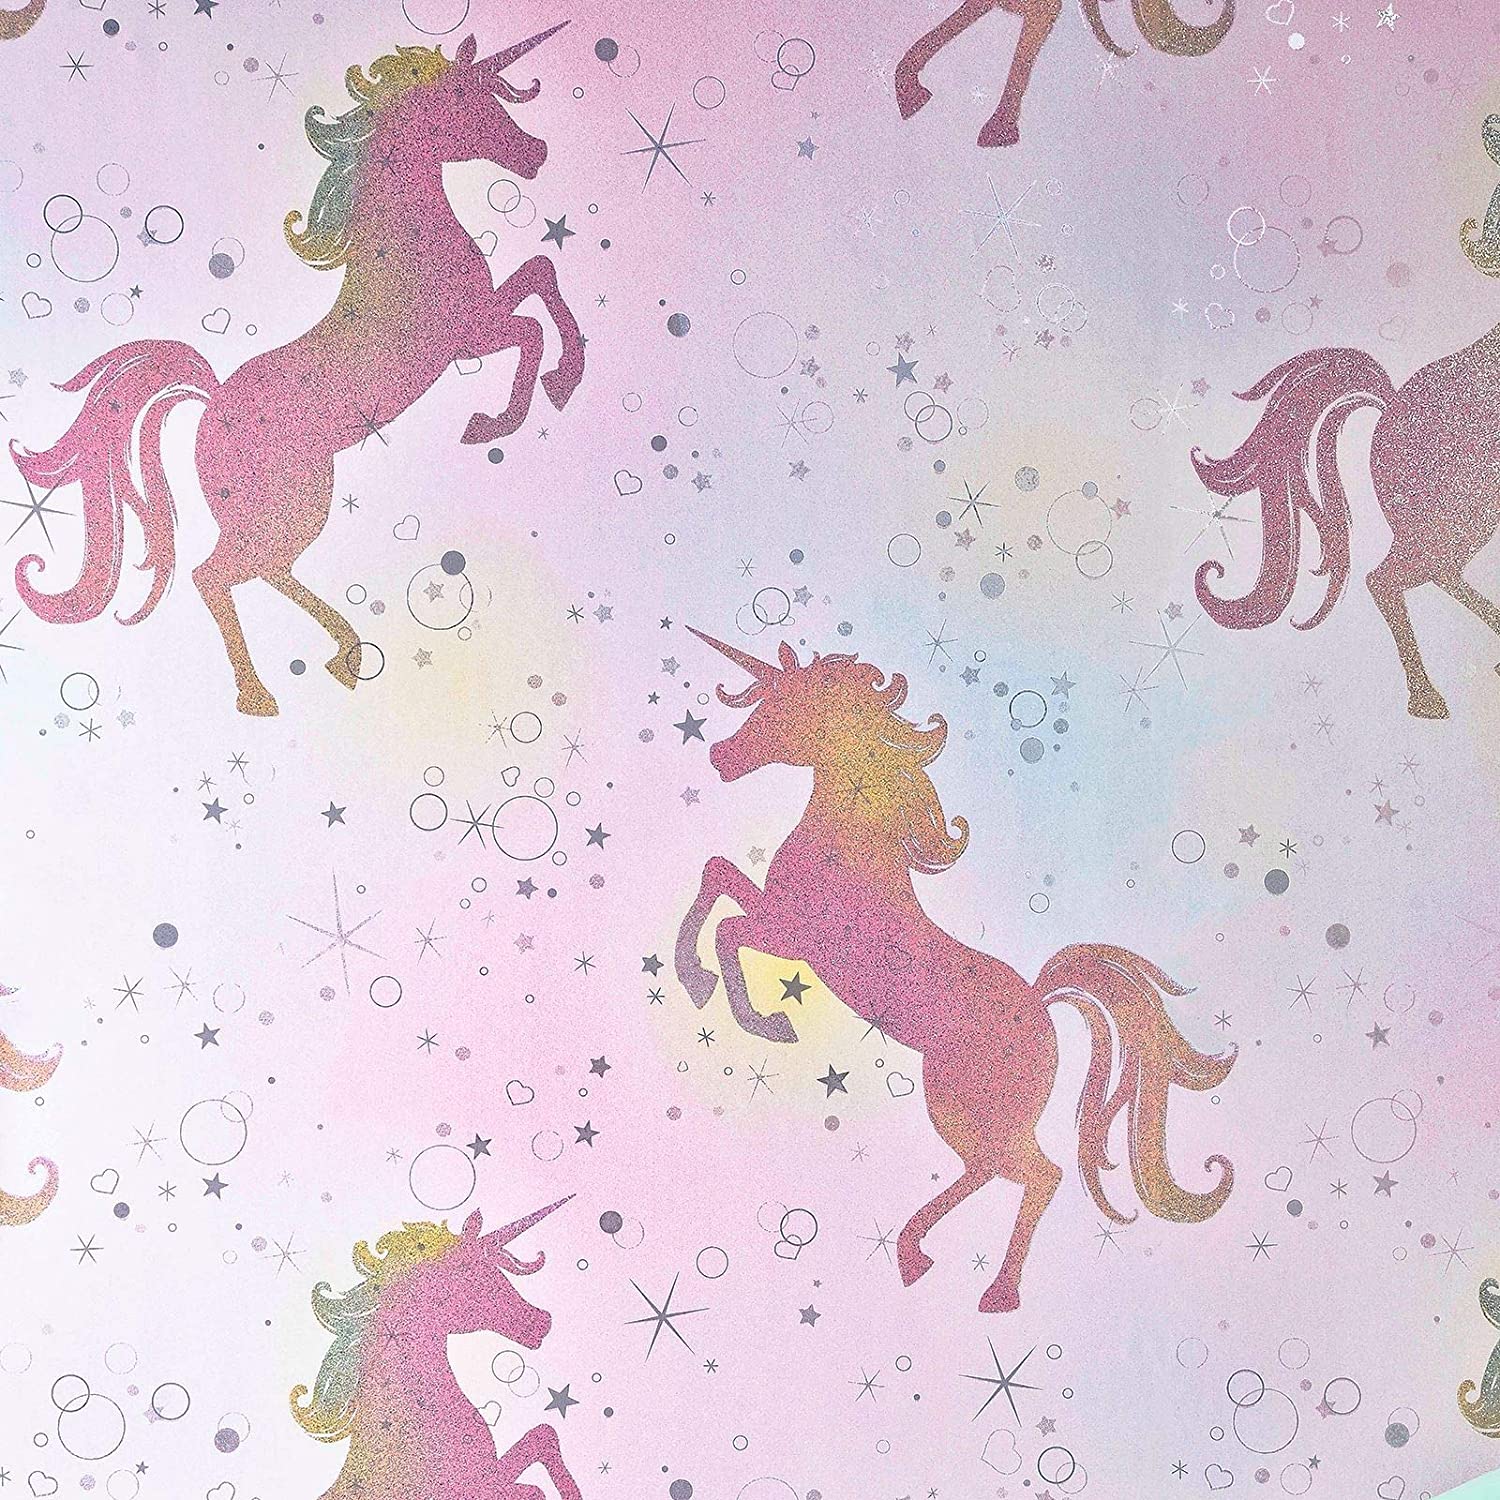 Rainbow Unicorn Wallpapers